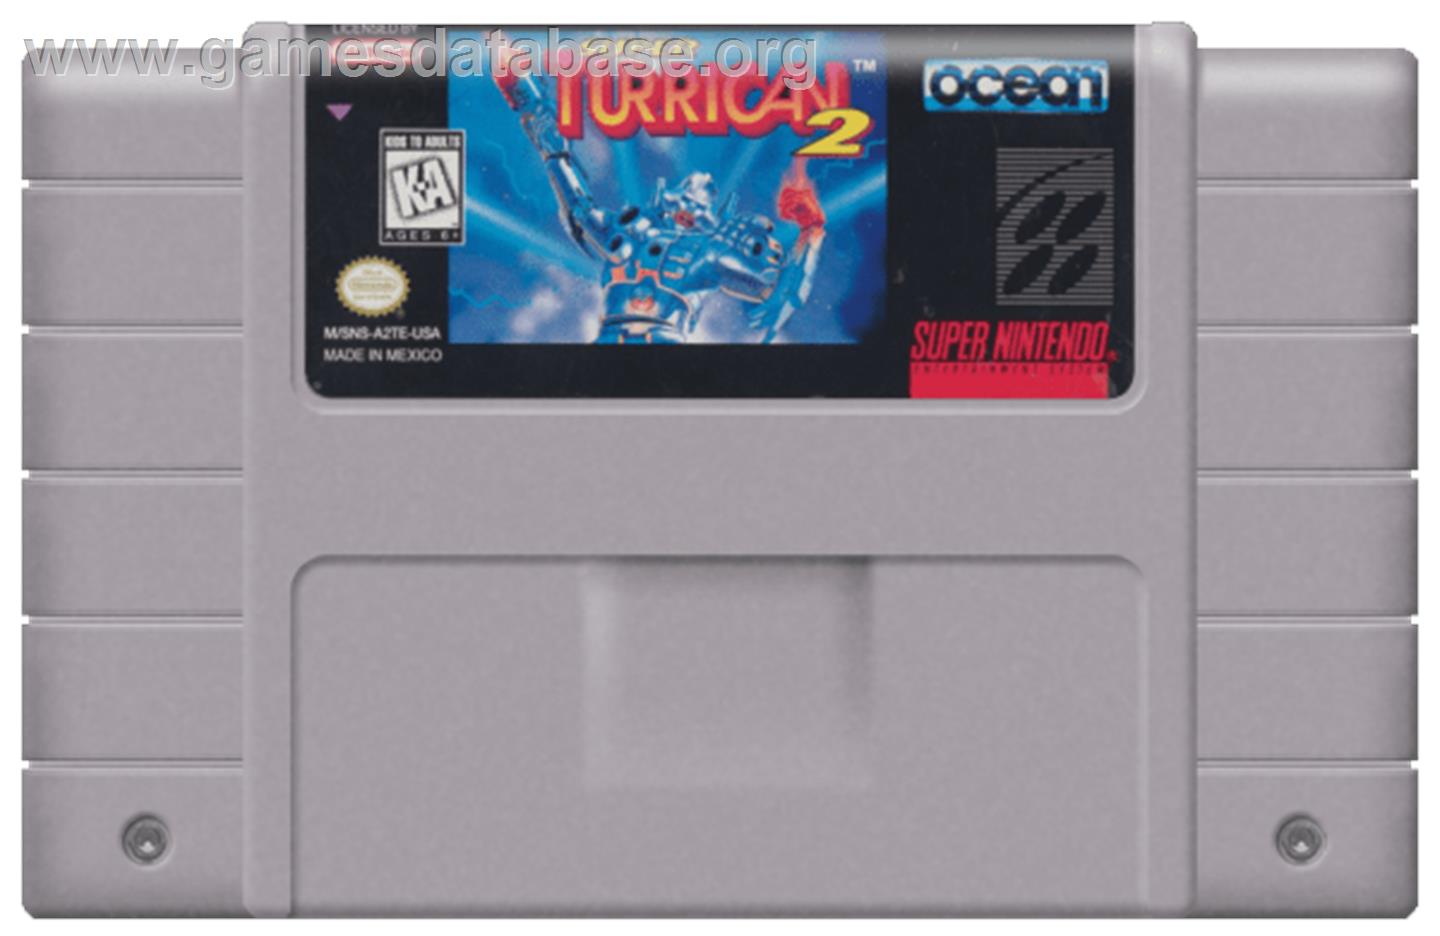 Super Turrican 2 - Nintendo SNES - Artwork - Cartridge